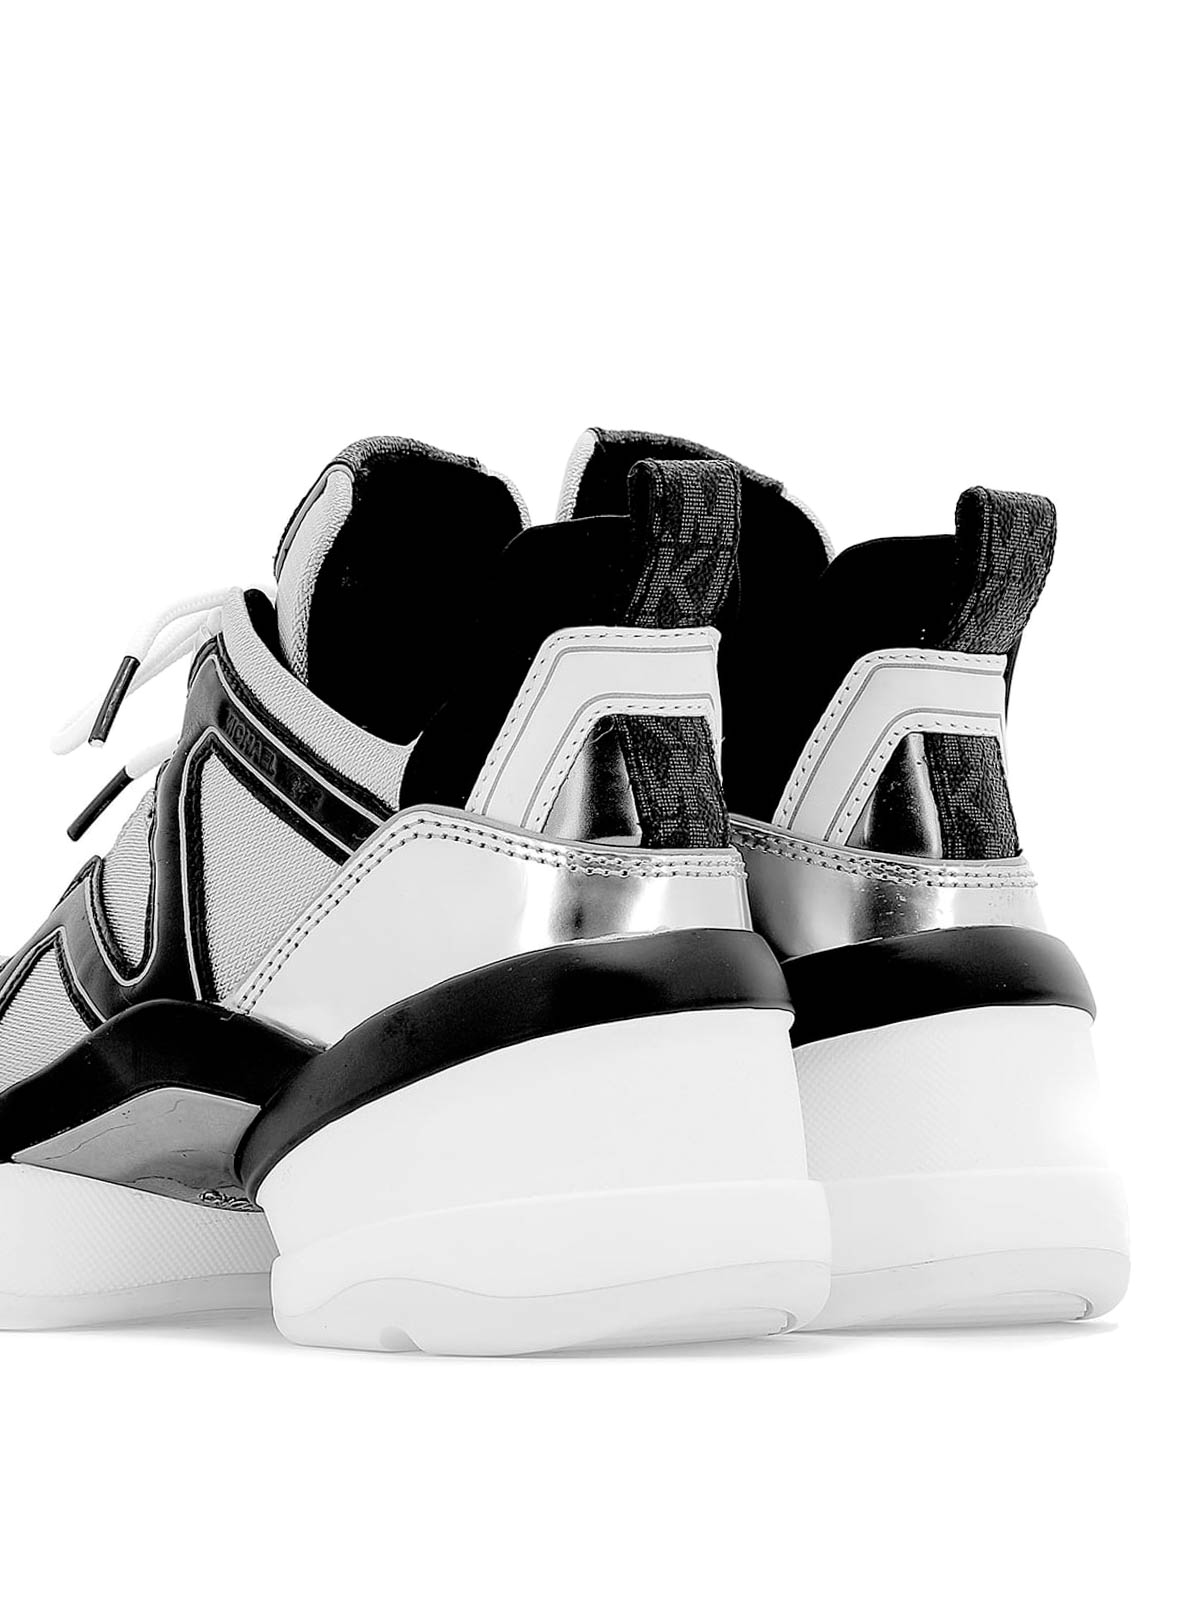 Michael Kors Olympia Sneaker on Sale  nl25tv 1690770684